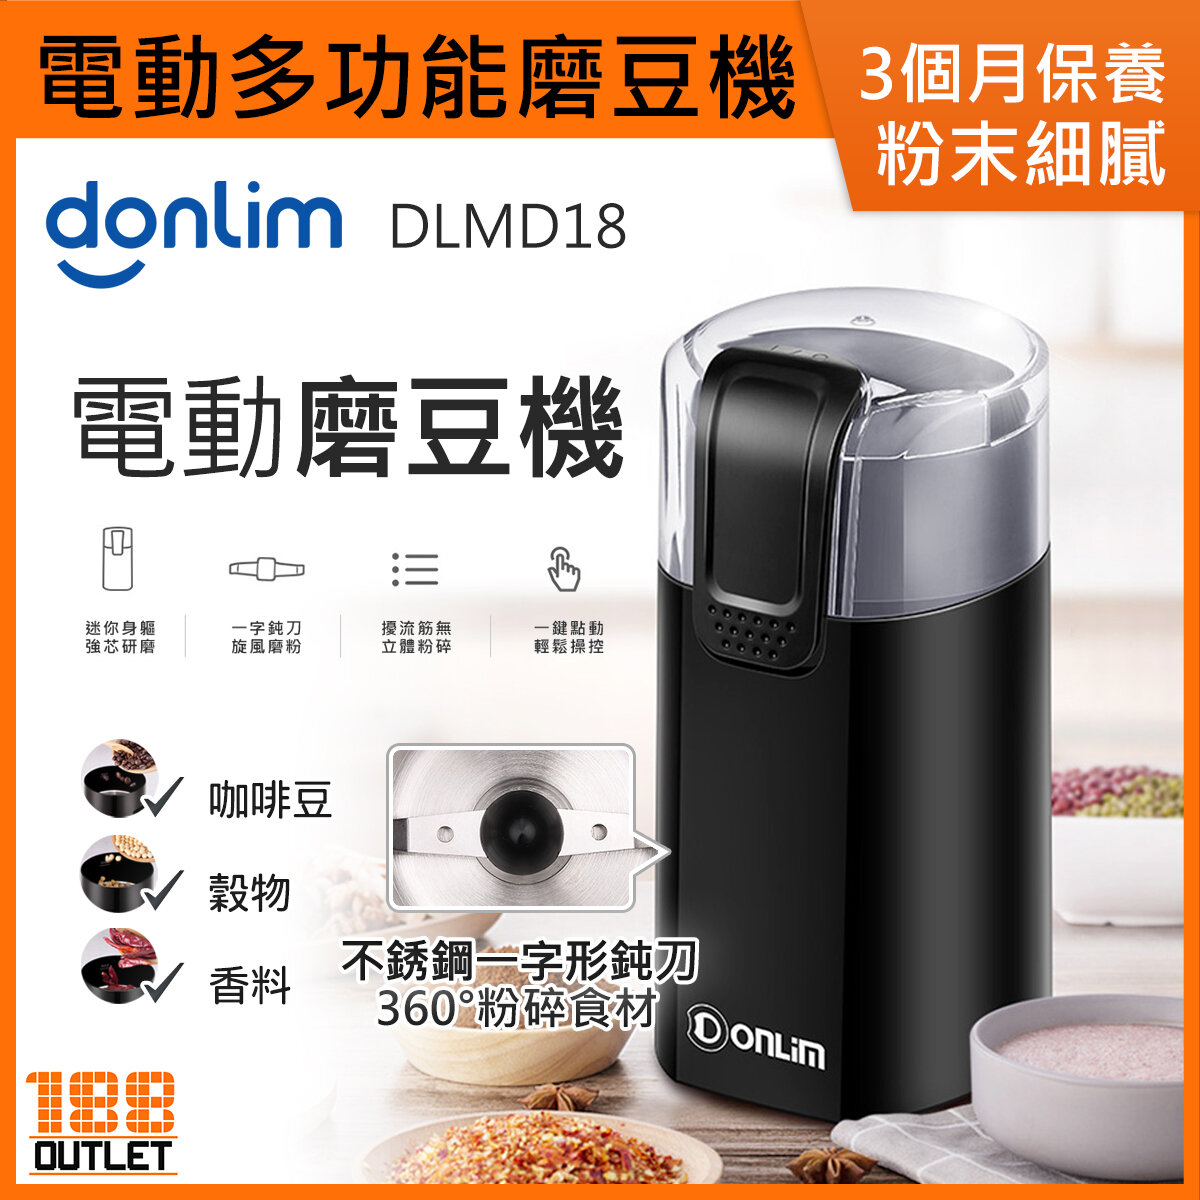 Multifunctional Coffee Grinder Blender DLMD18 [Parallel Import]